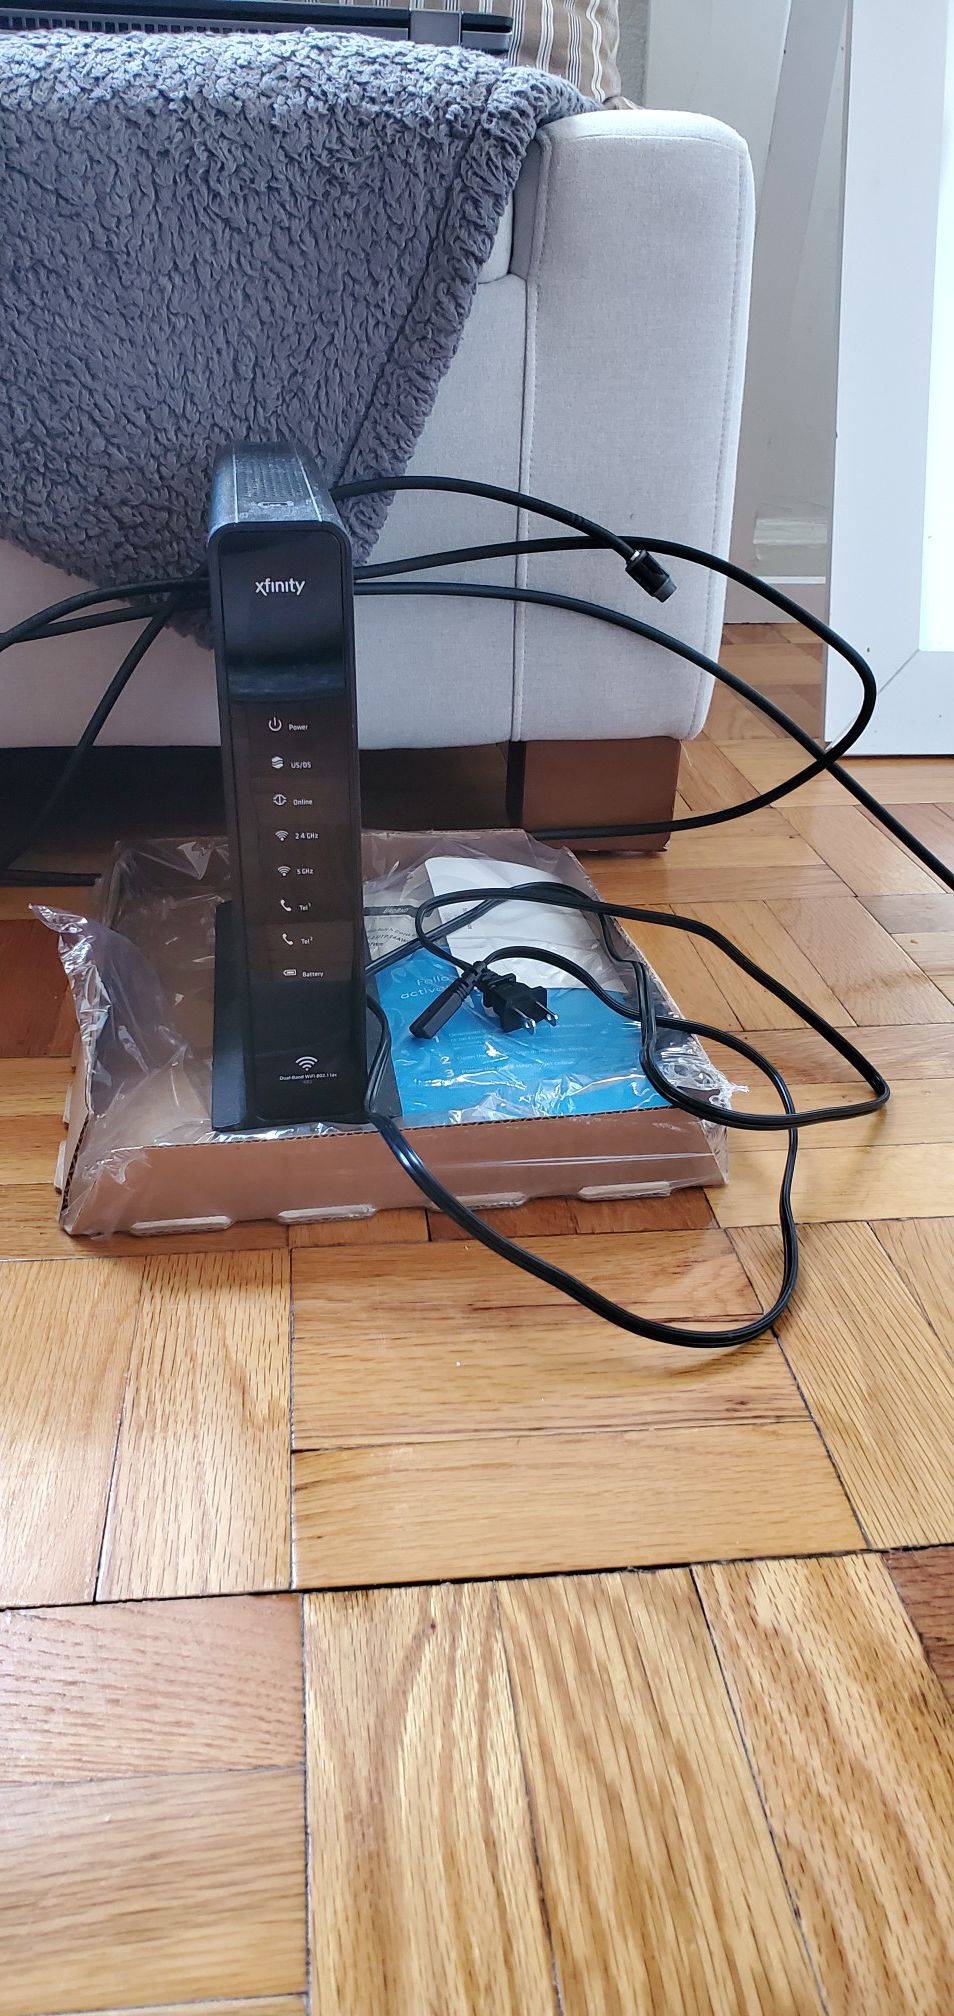 Xfinity internet modem router